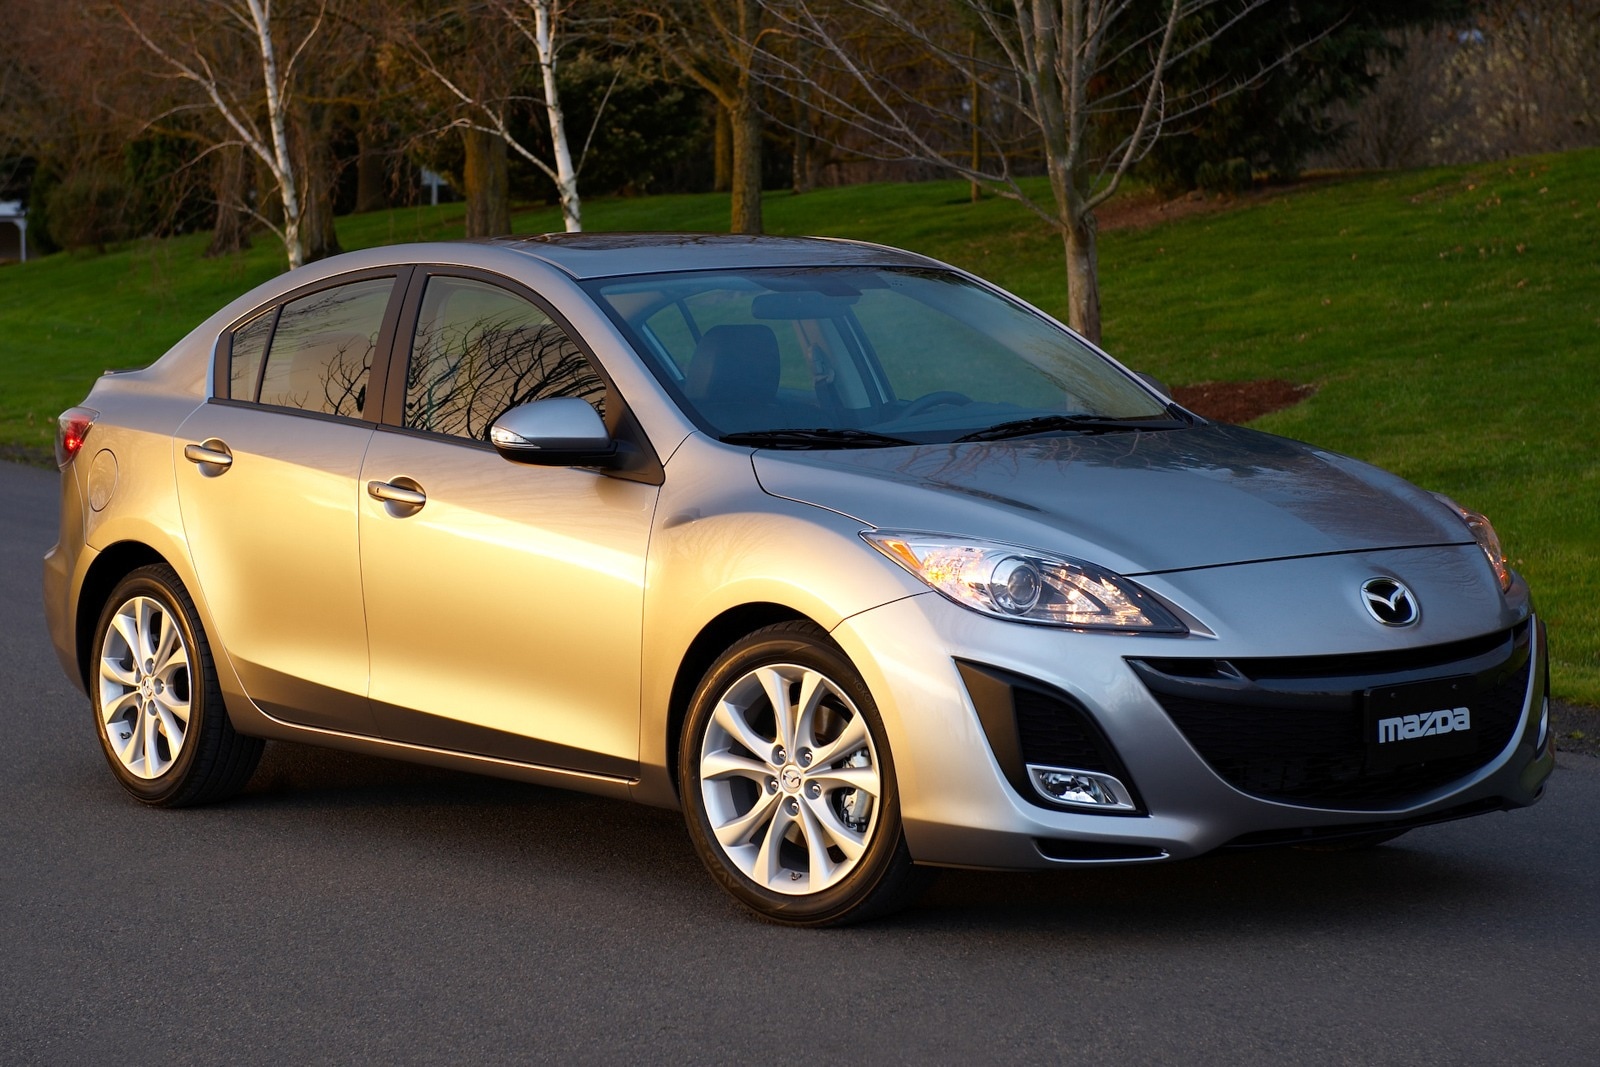 2010 Mazda 3 Review & Ratings | Edmunds